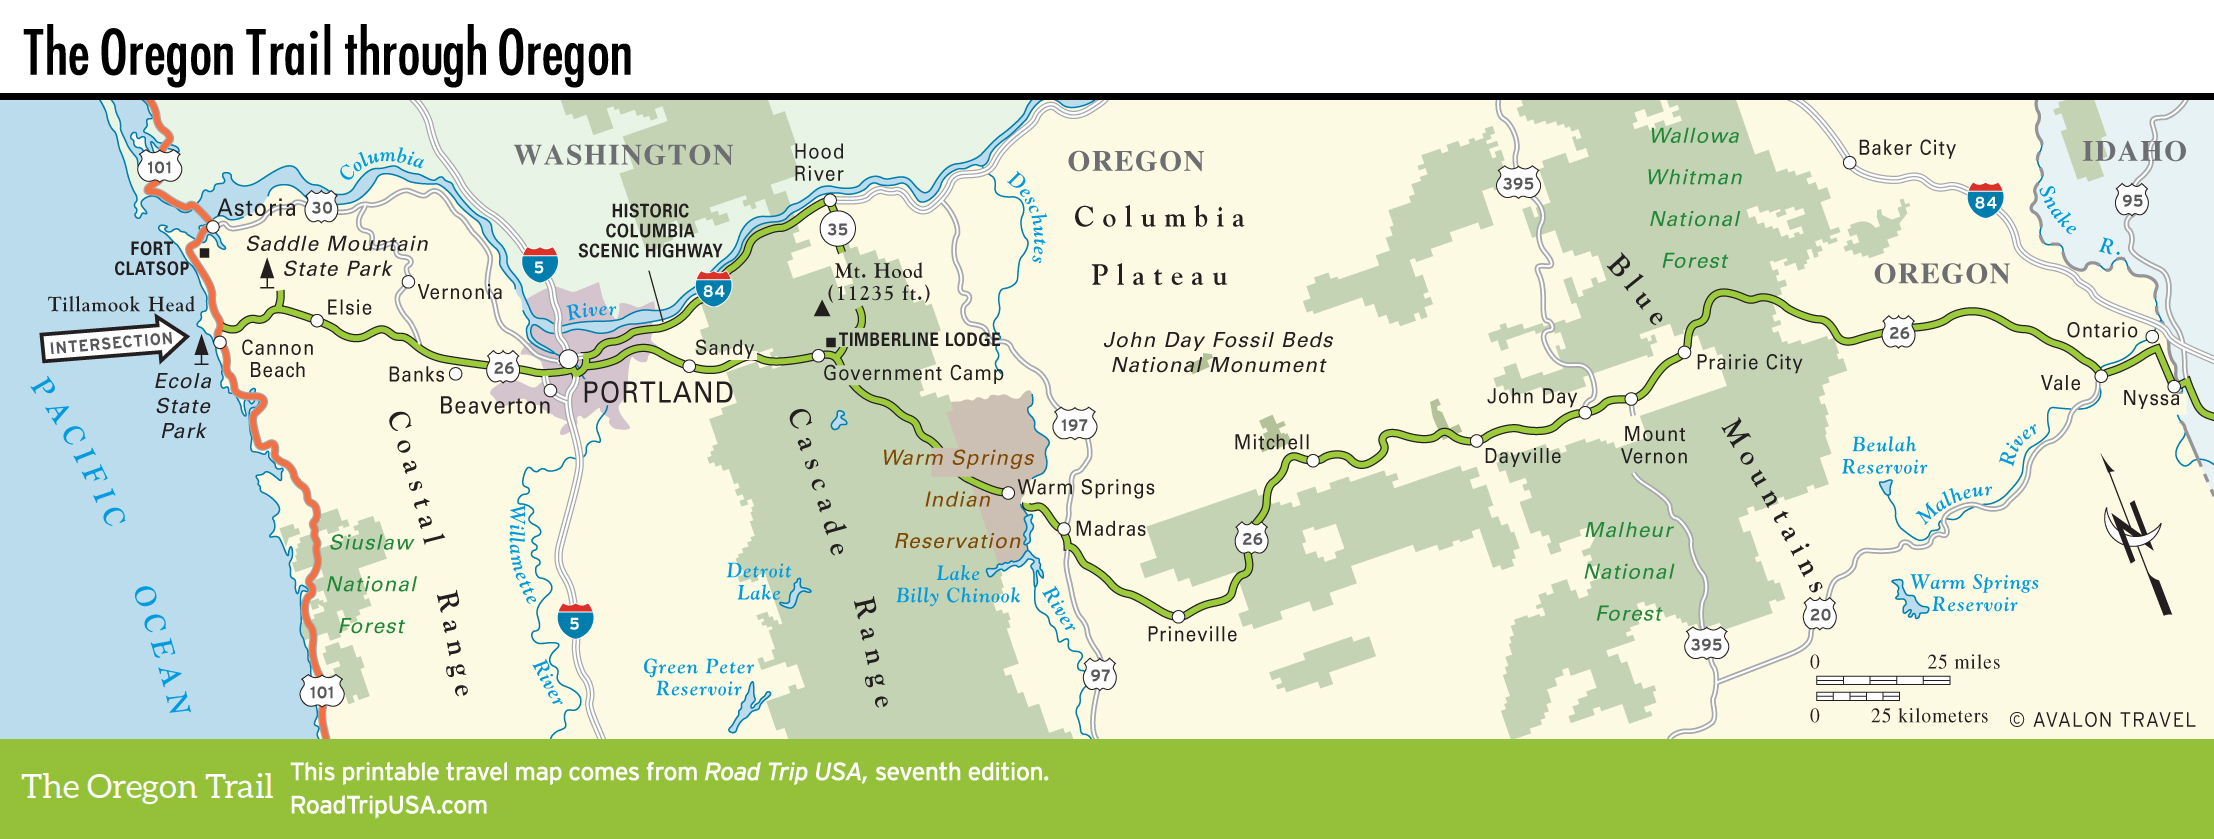 The Oregon Trail #22